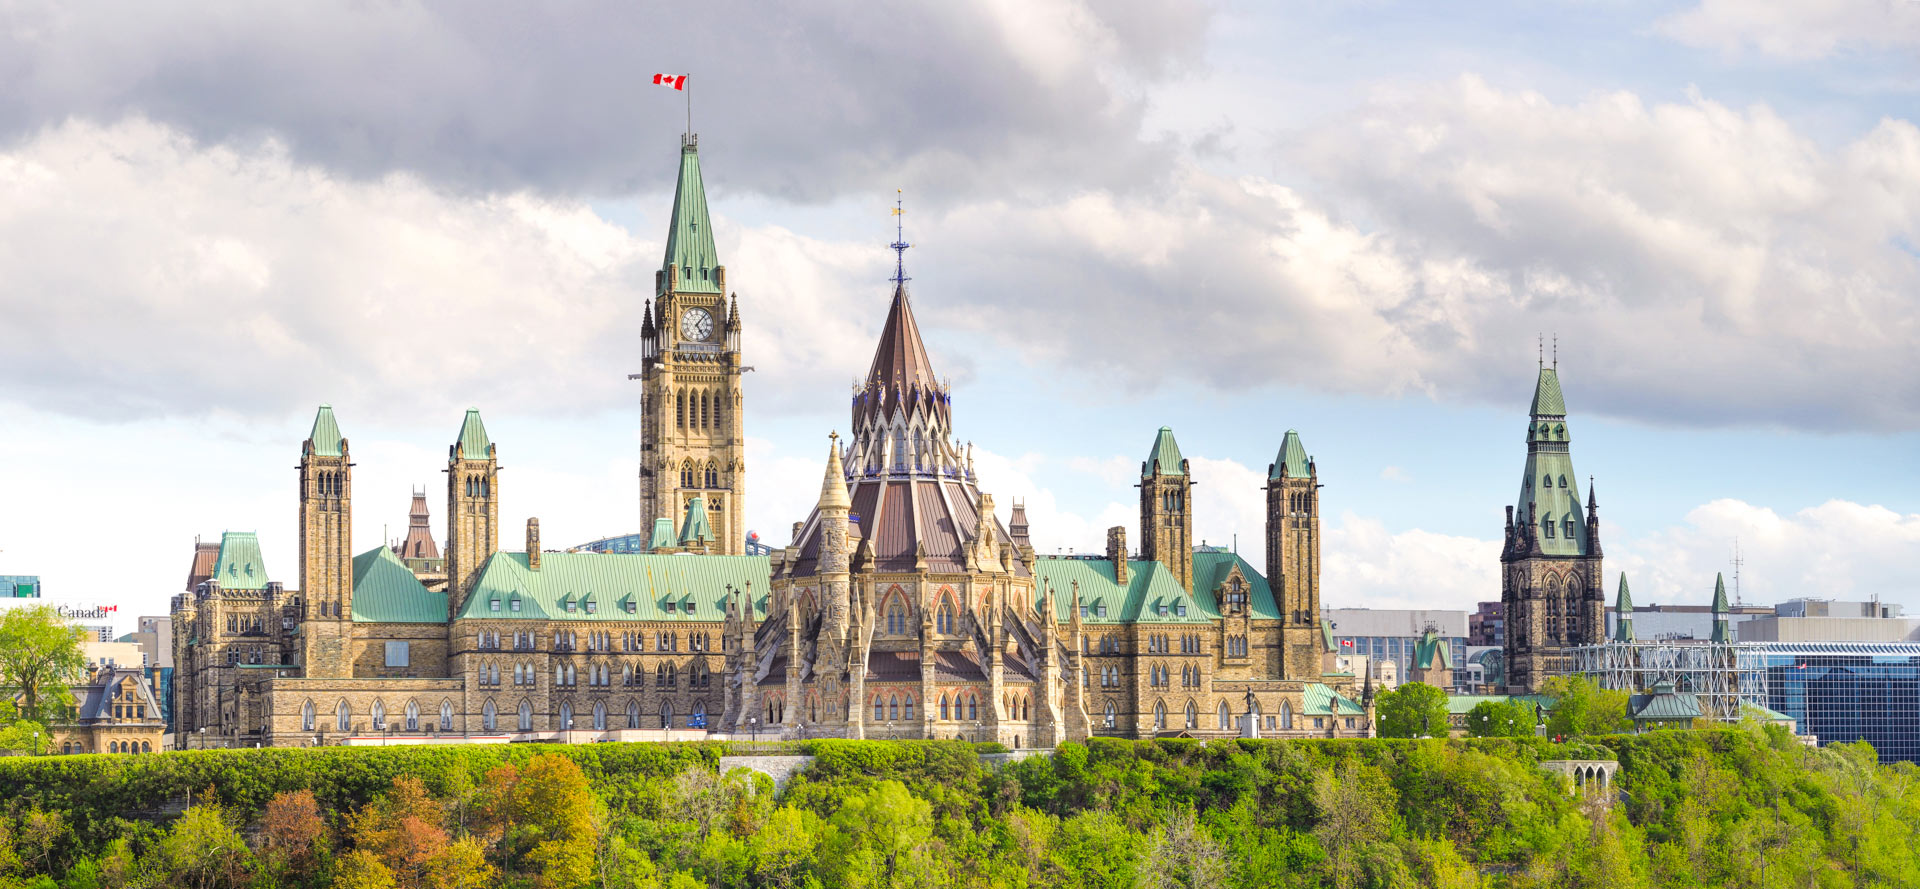 Ottawa and Parliament Hill, Canada